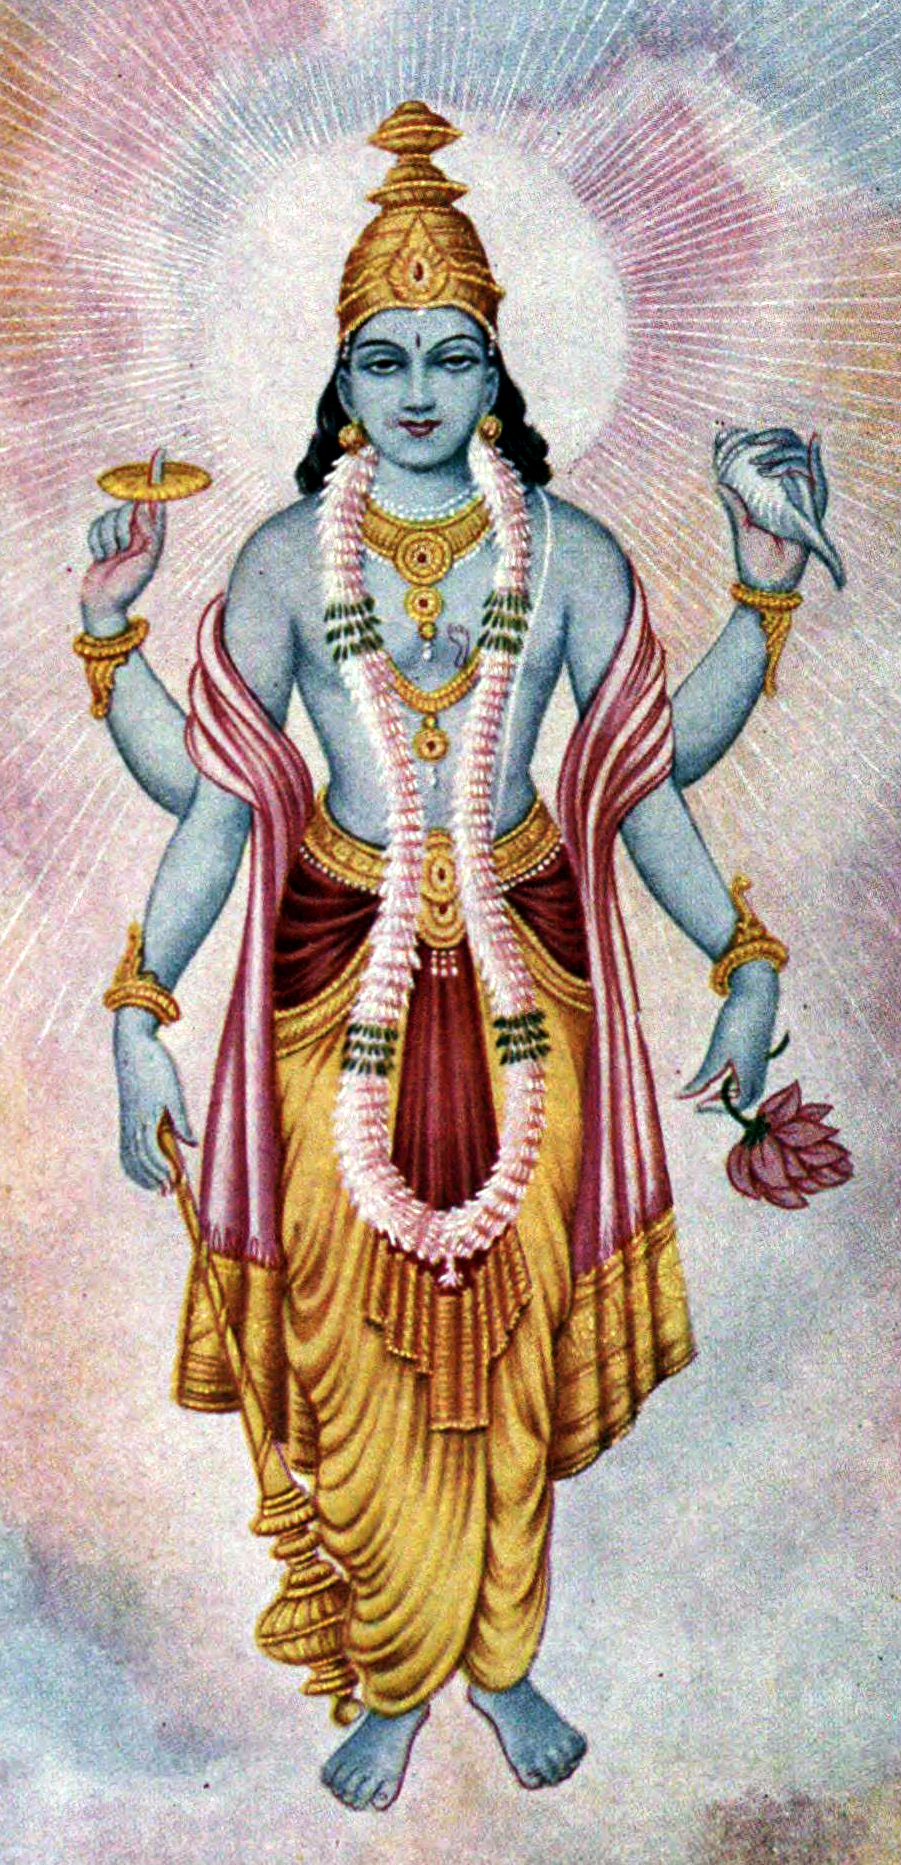 An image of Lord Narayana